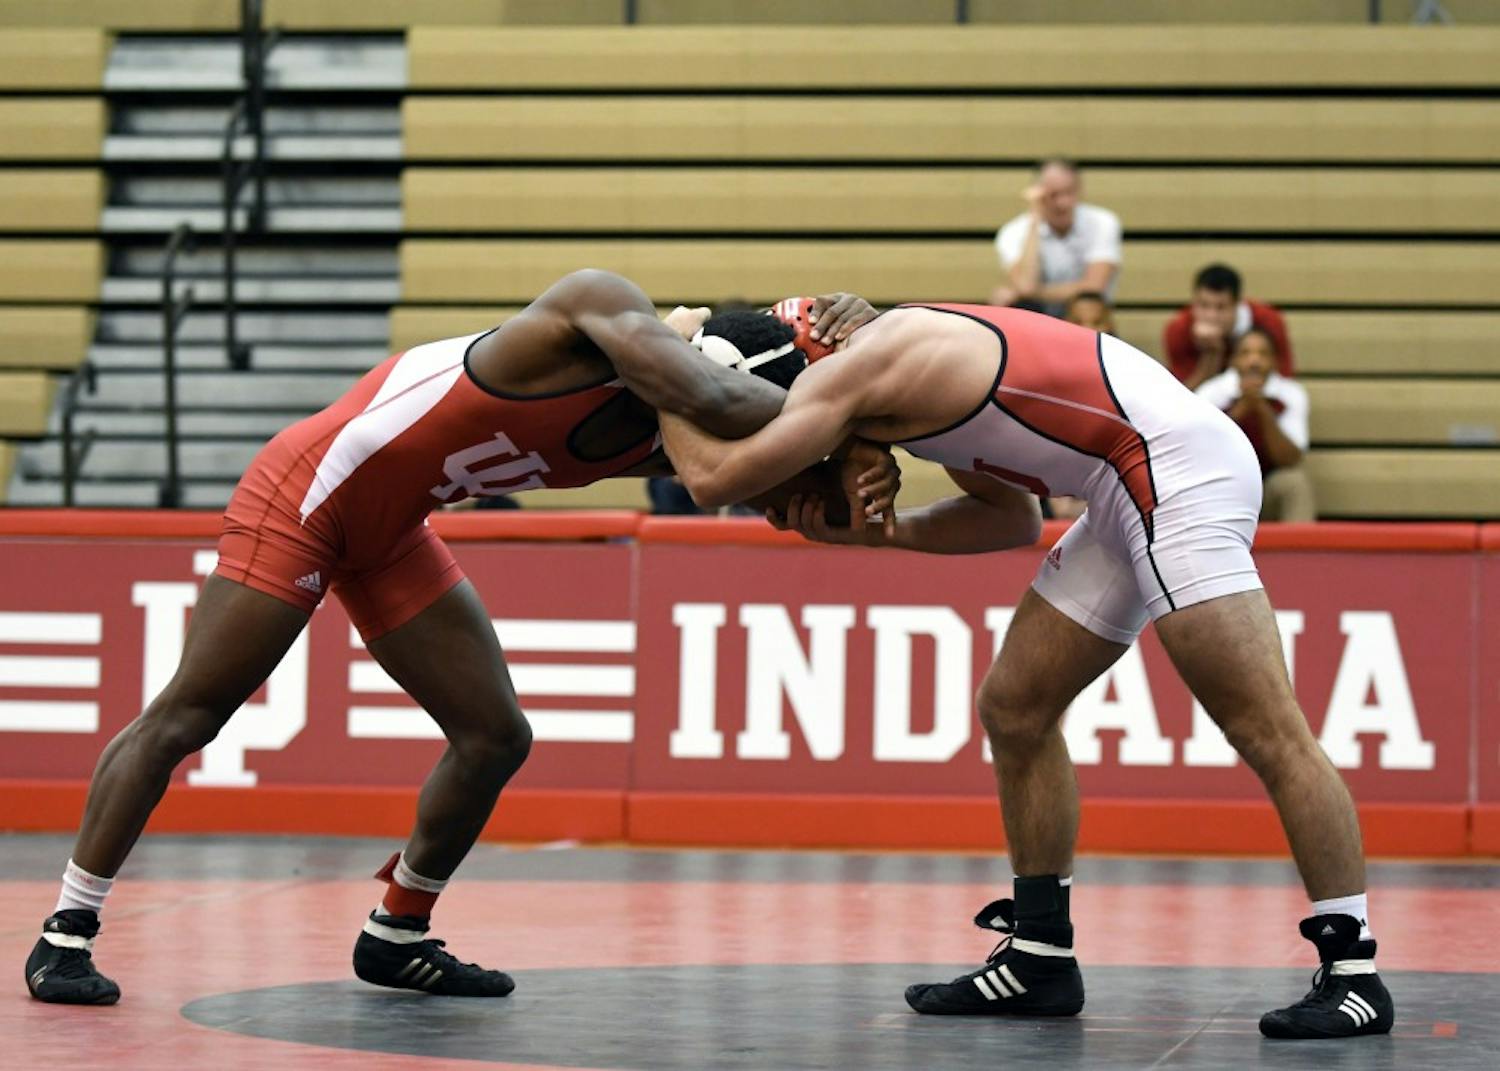 Penn wrestling matches up for intrasquad Wrestle-offs